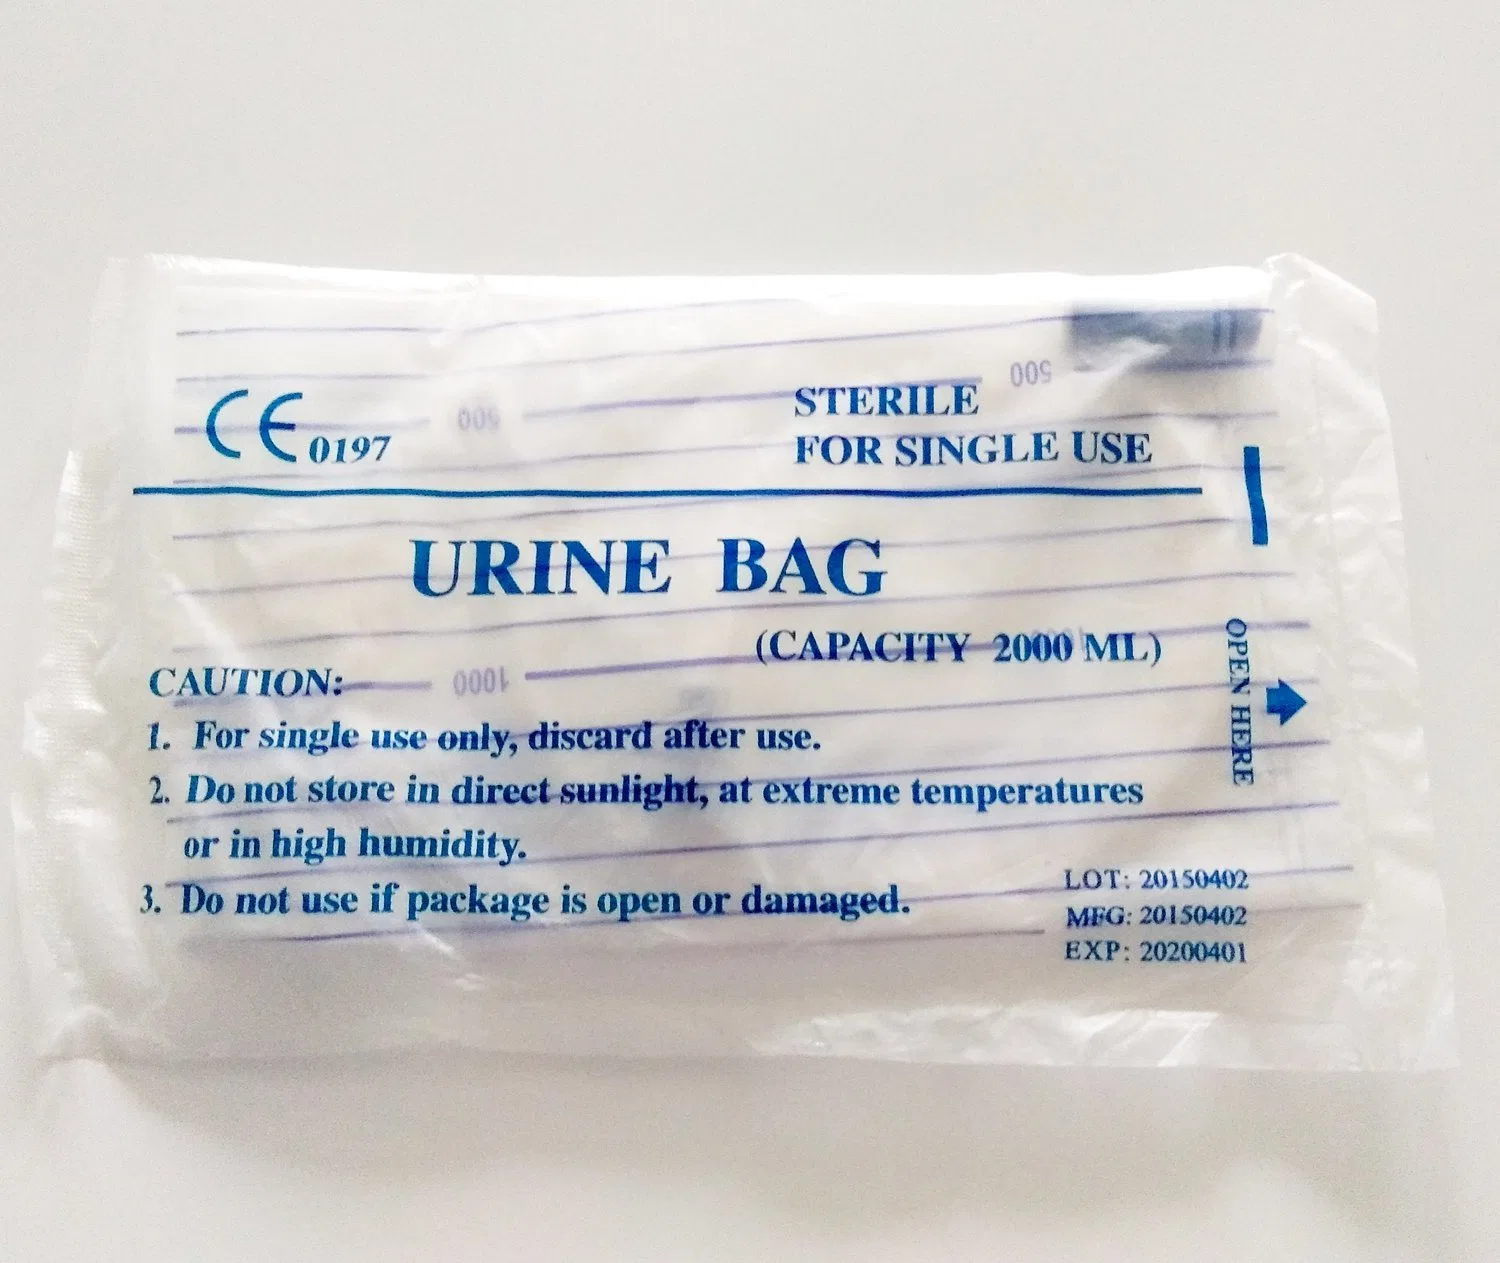 28*20 Cm, Urine Bag with Push Pull Valve